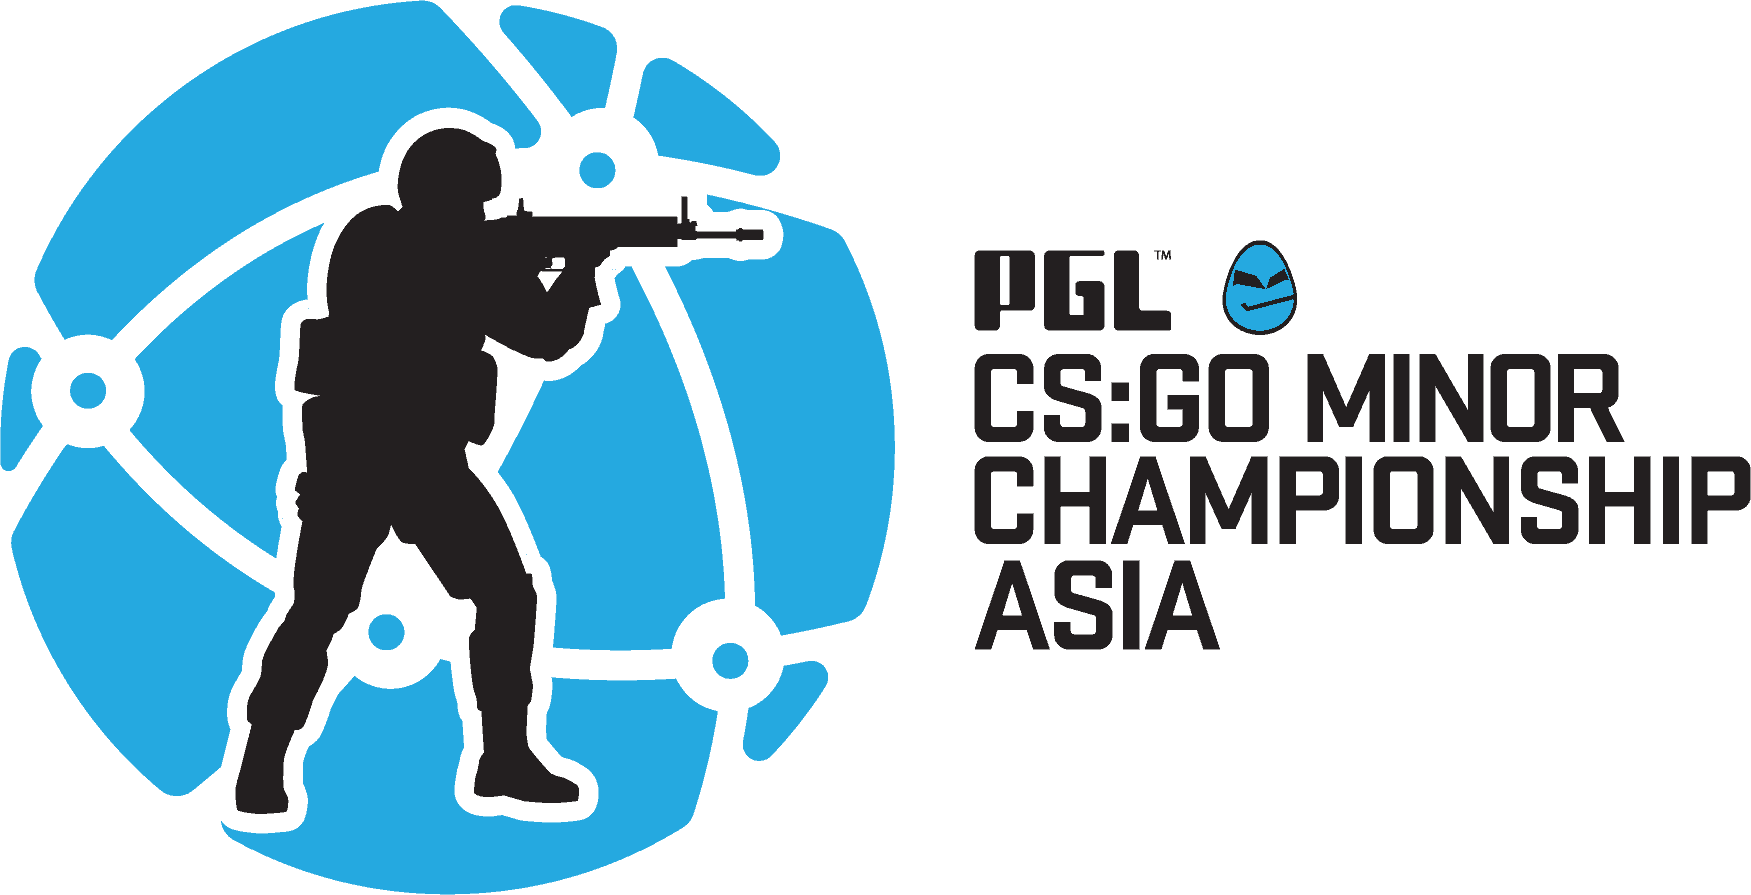 PGL and eGG Network present the CSGO Minor Championship ASIA